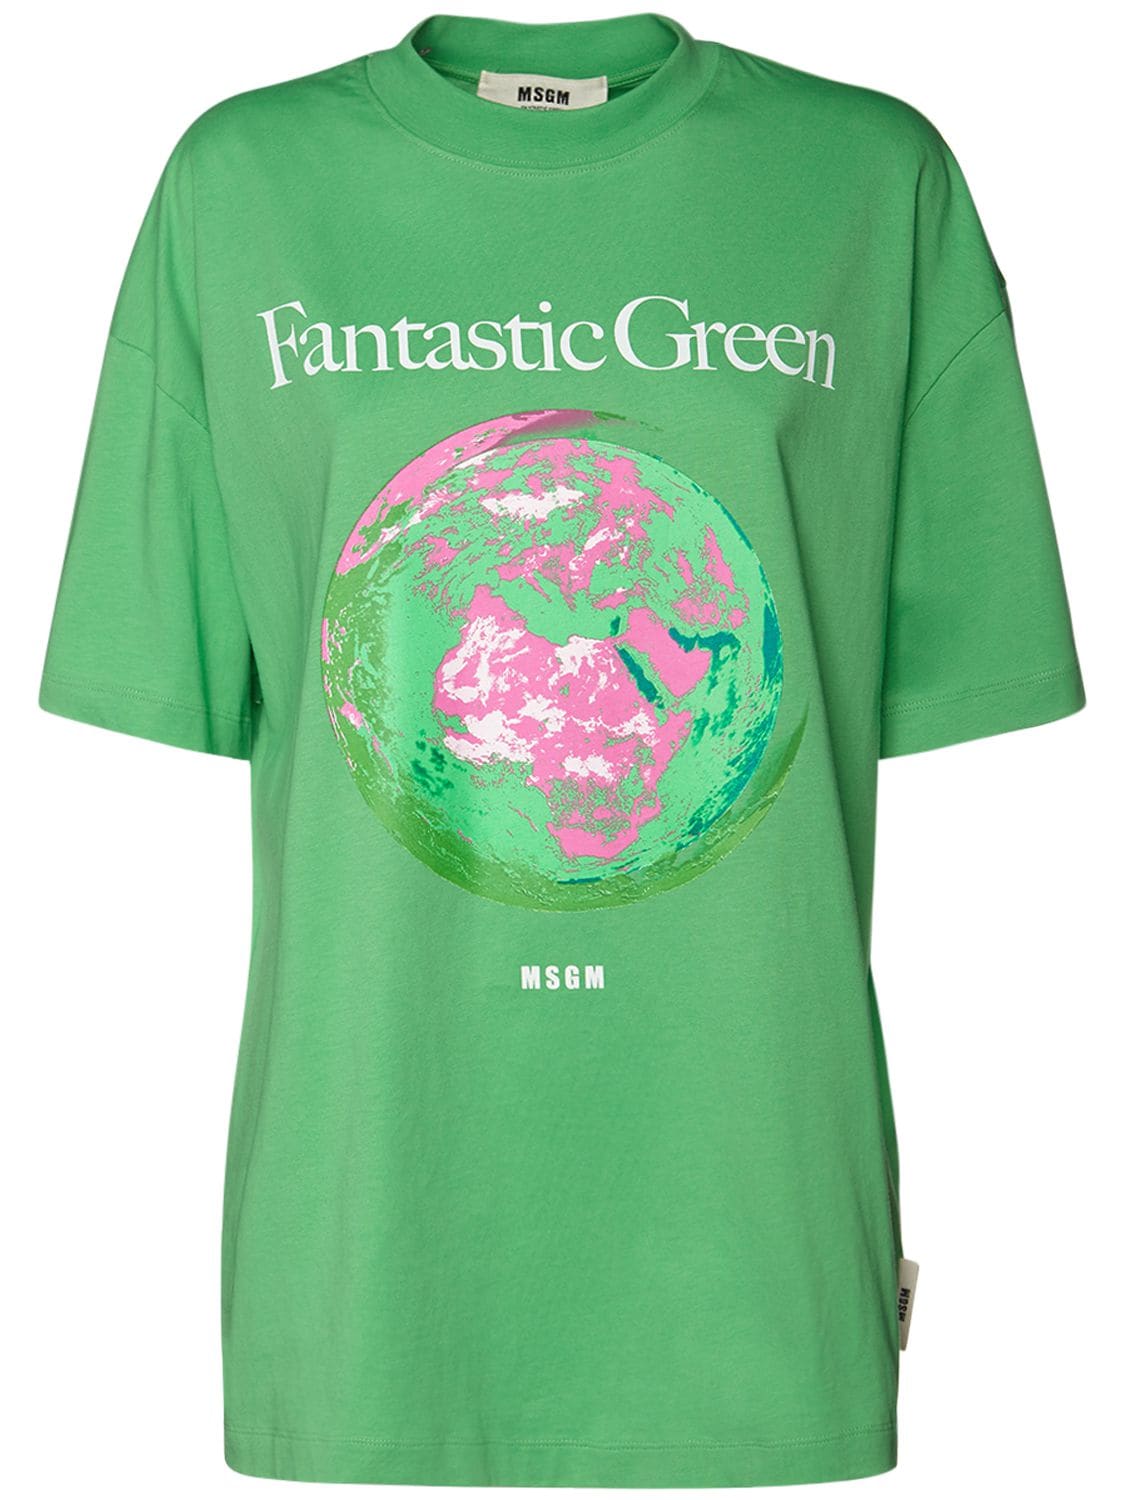 Fantastic Green Printed Cotton T-shirt